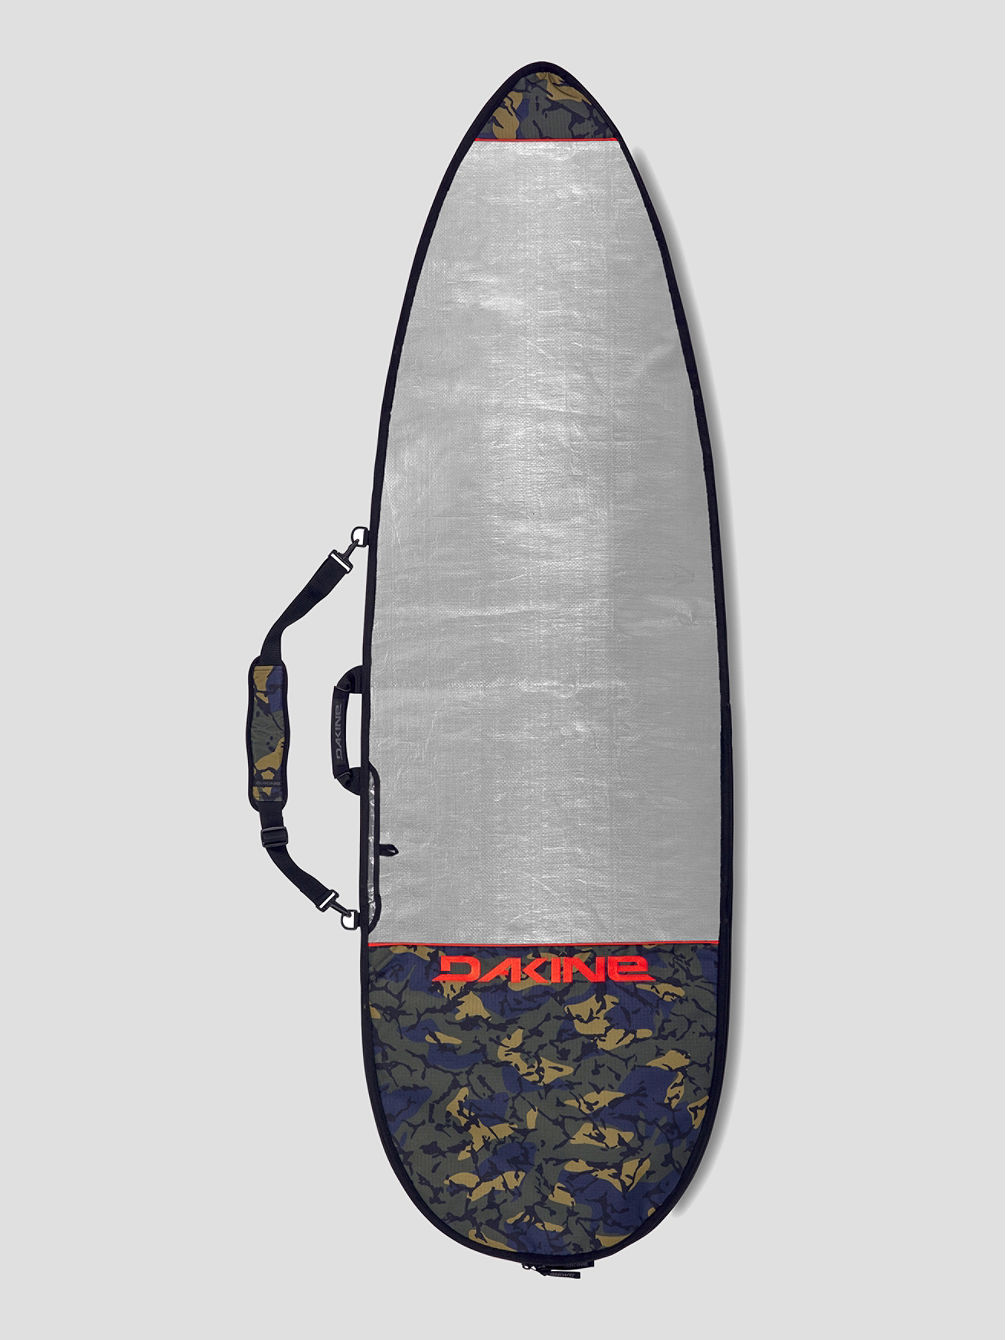 Daylight Thruster 6.3 Saco de Prancha de Surf